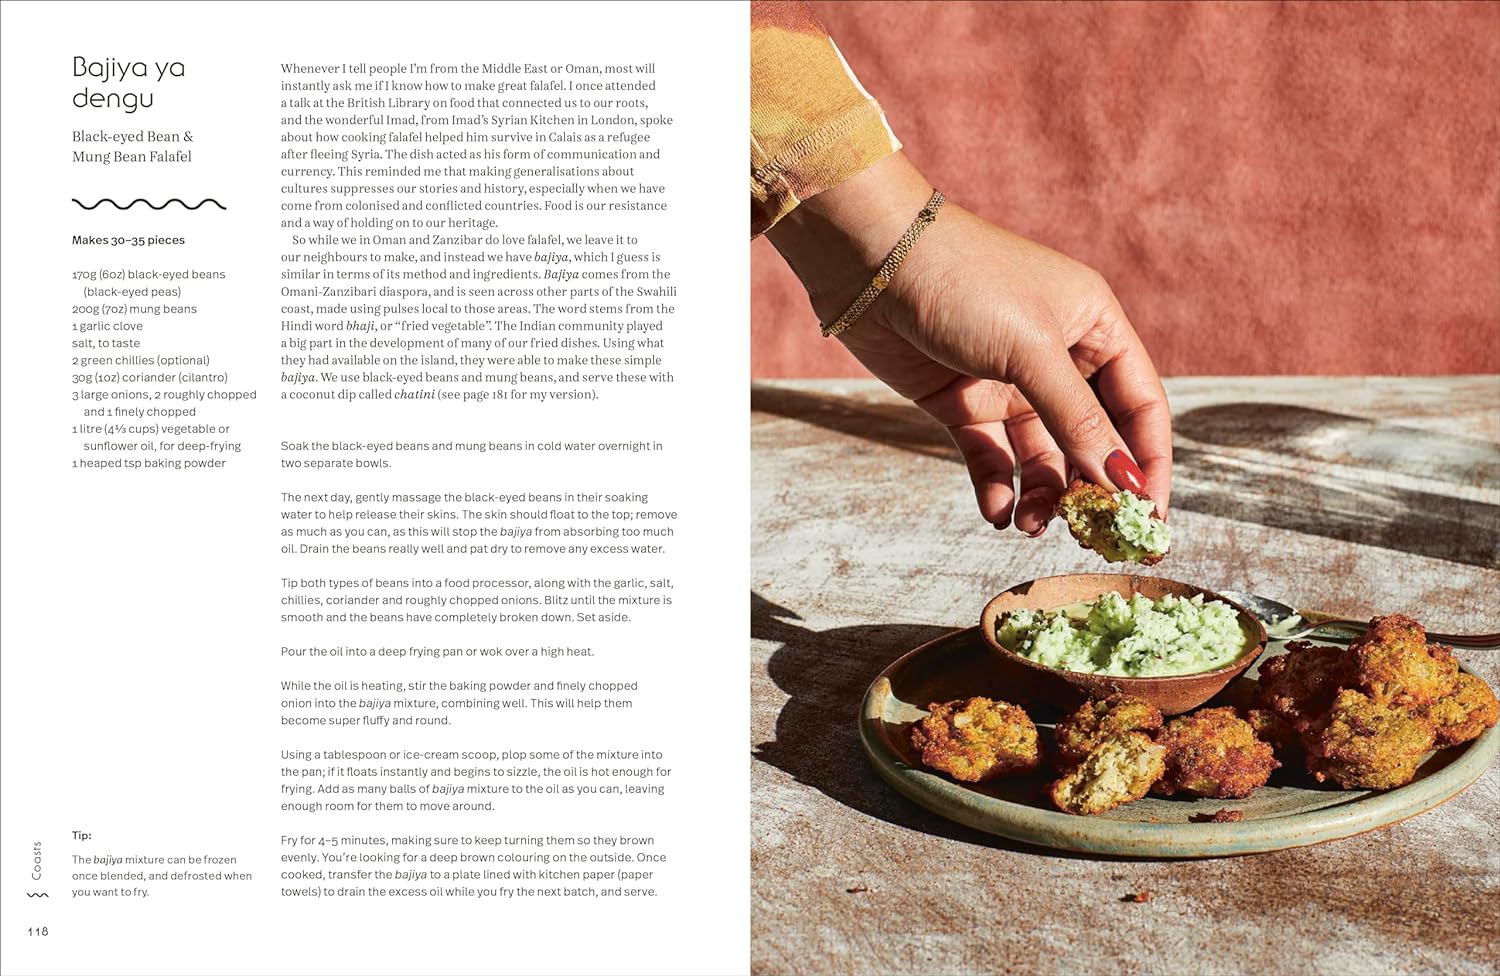 Bahari: Recipes From an Omani Kitchen and Beyond (Dina Macki)